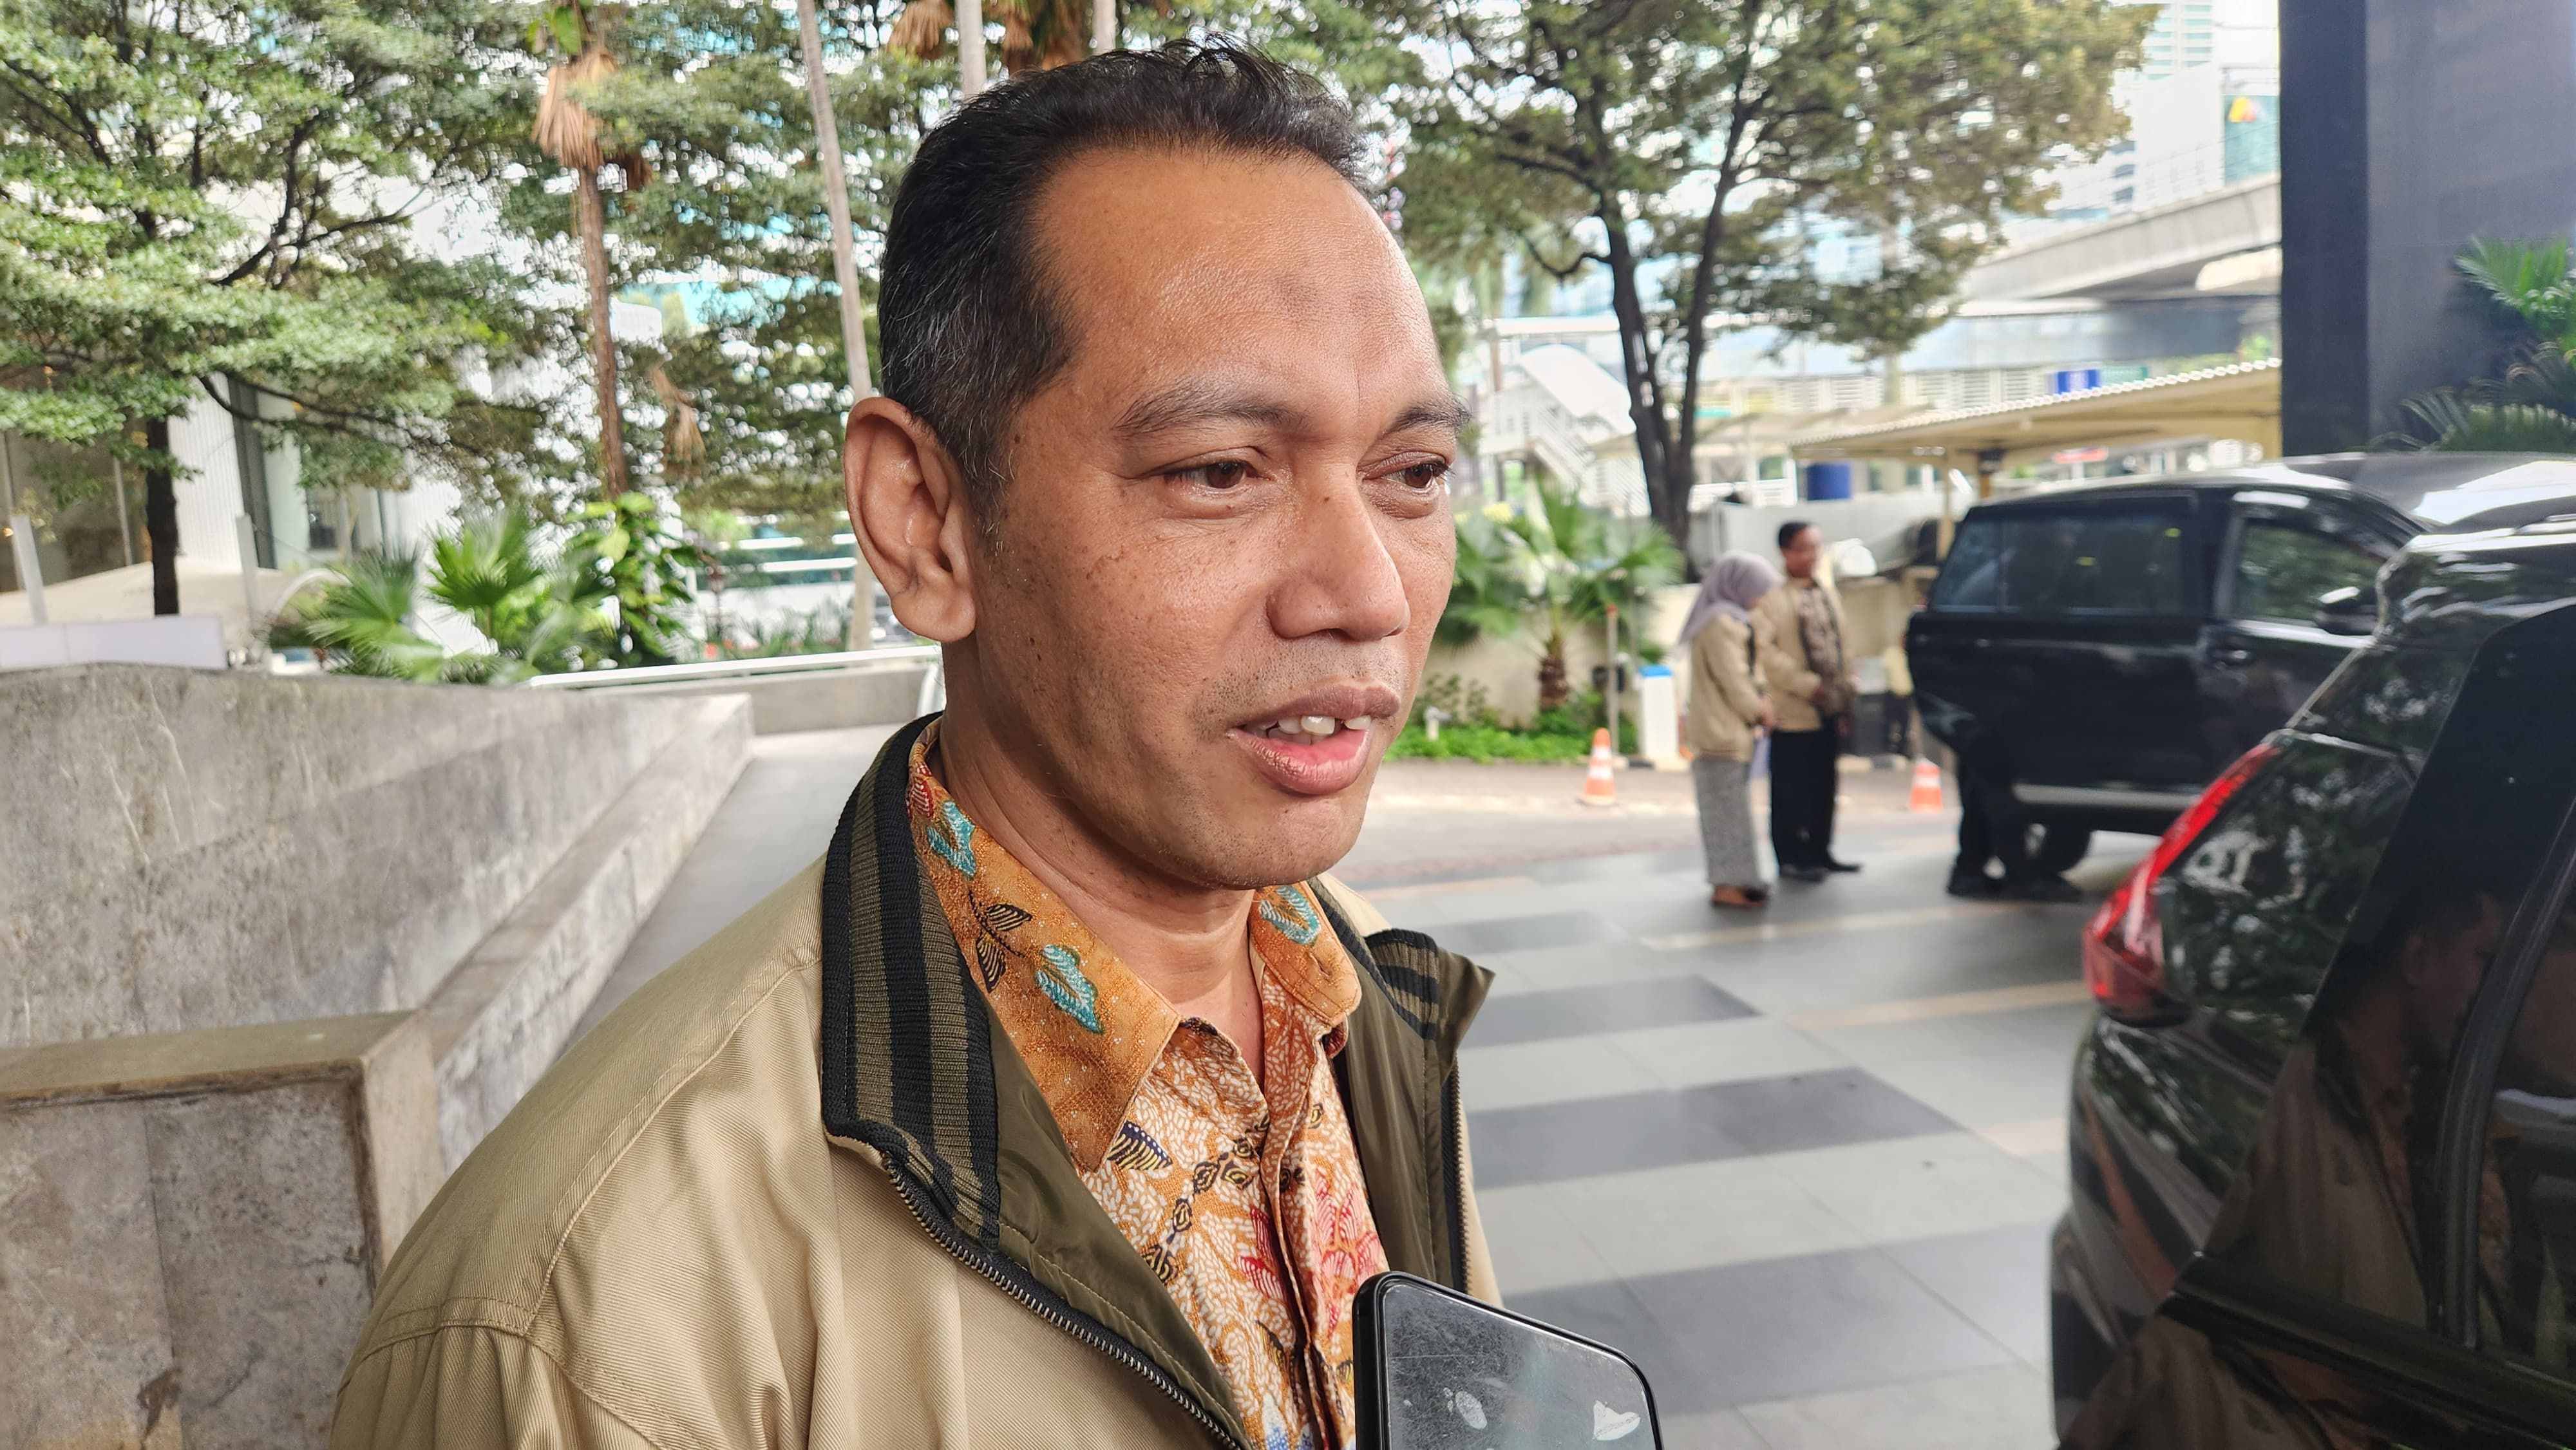 Dilaporkan ke Dewas, Wakil Ketua KPK Bantah Tekan Pihak Kementan untuk Mutasi Pegawai